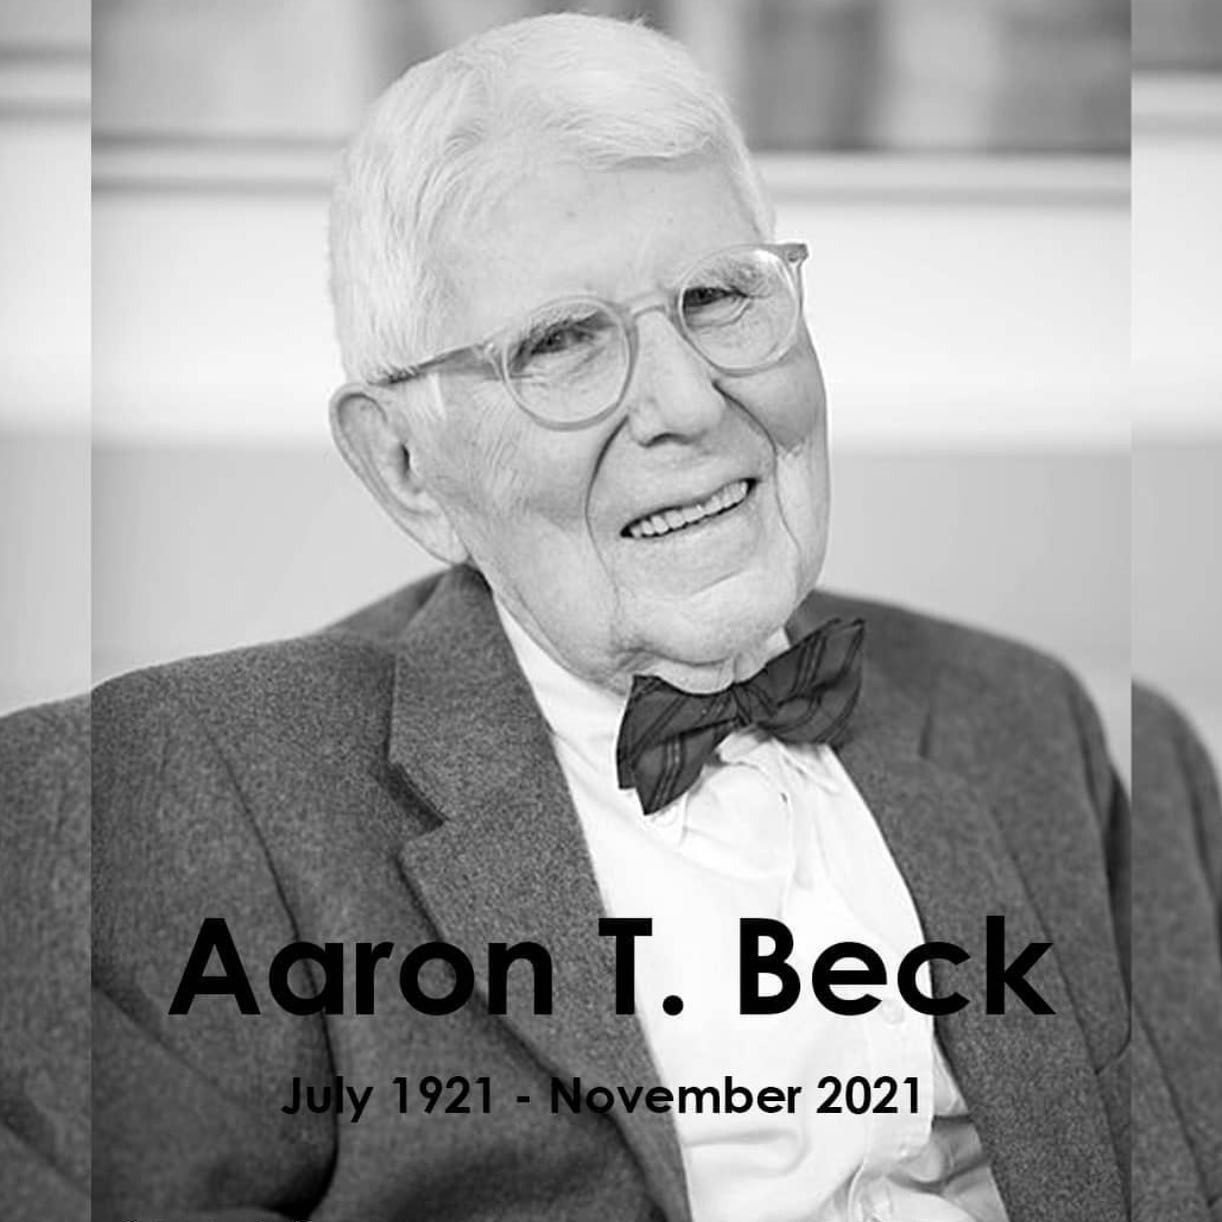 In Memory of Aaron Temkin Beck